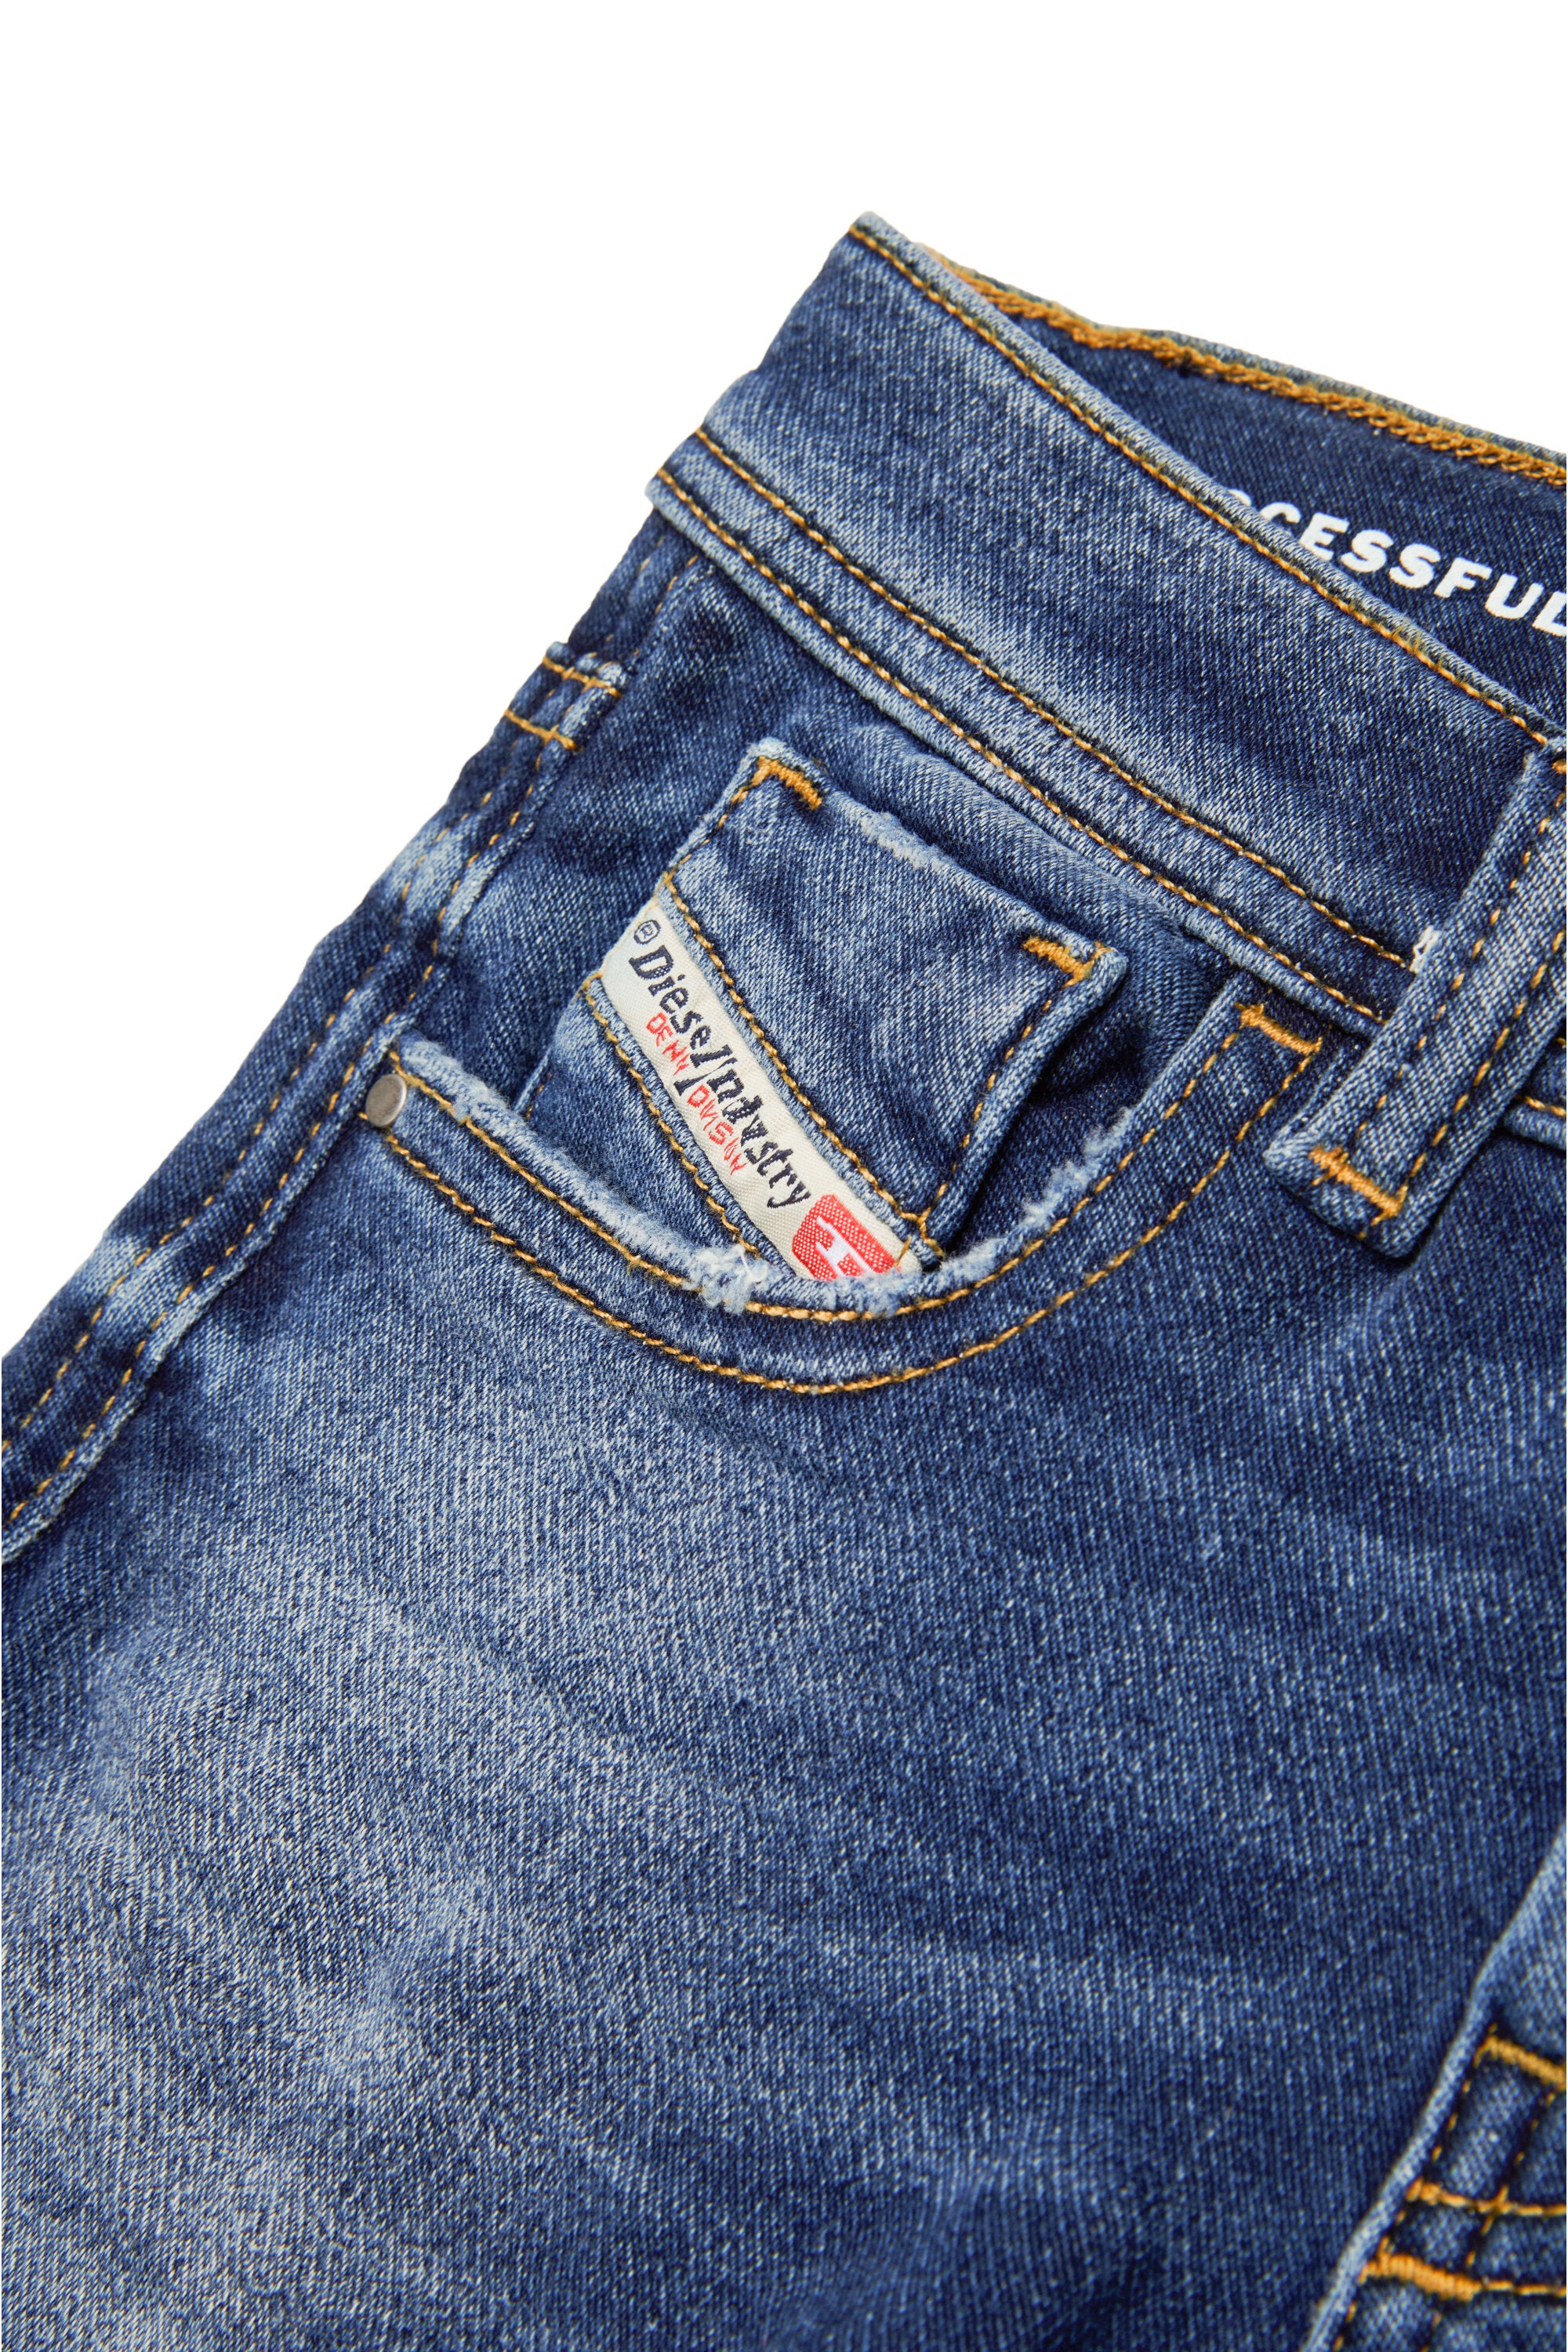 JoggJeans® super skinny degradado oscuro - 2017 Slandy